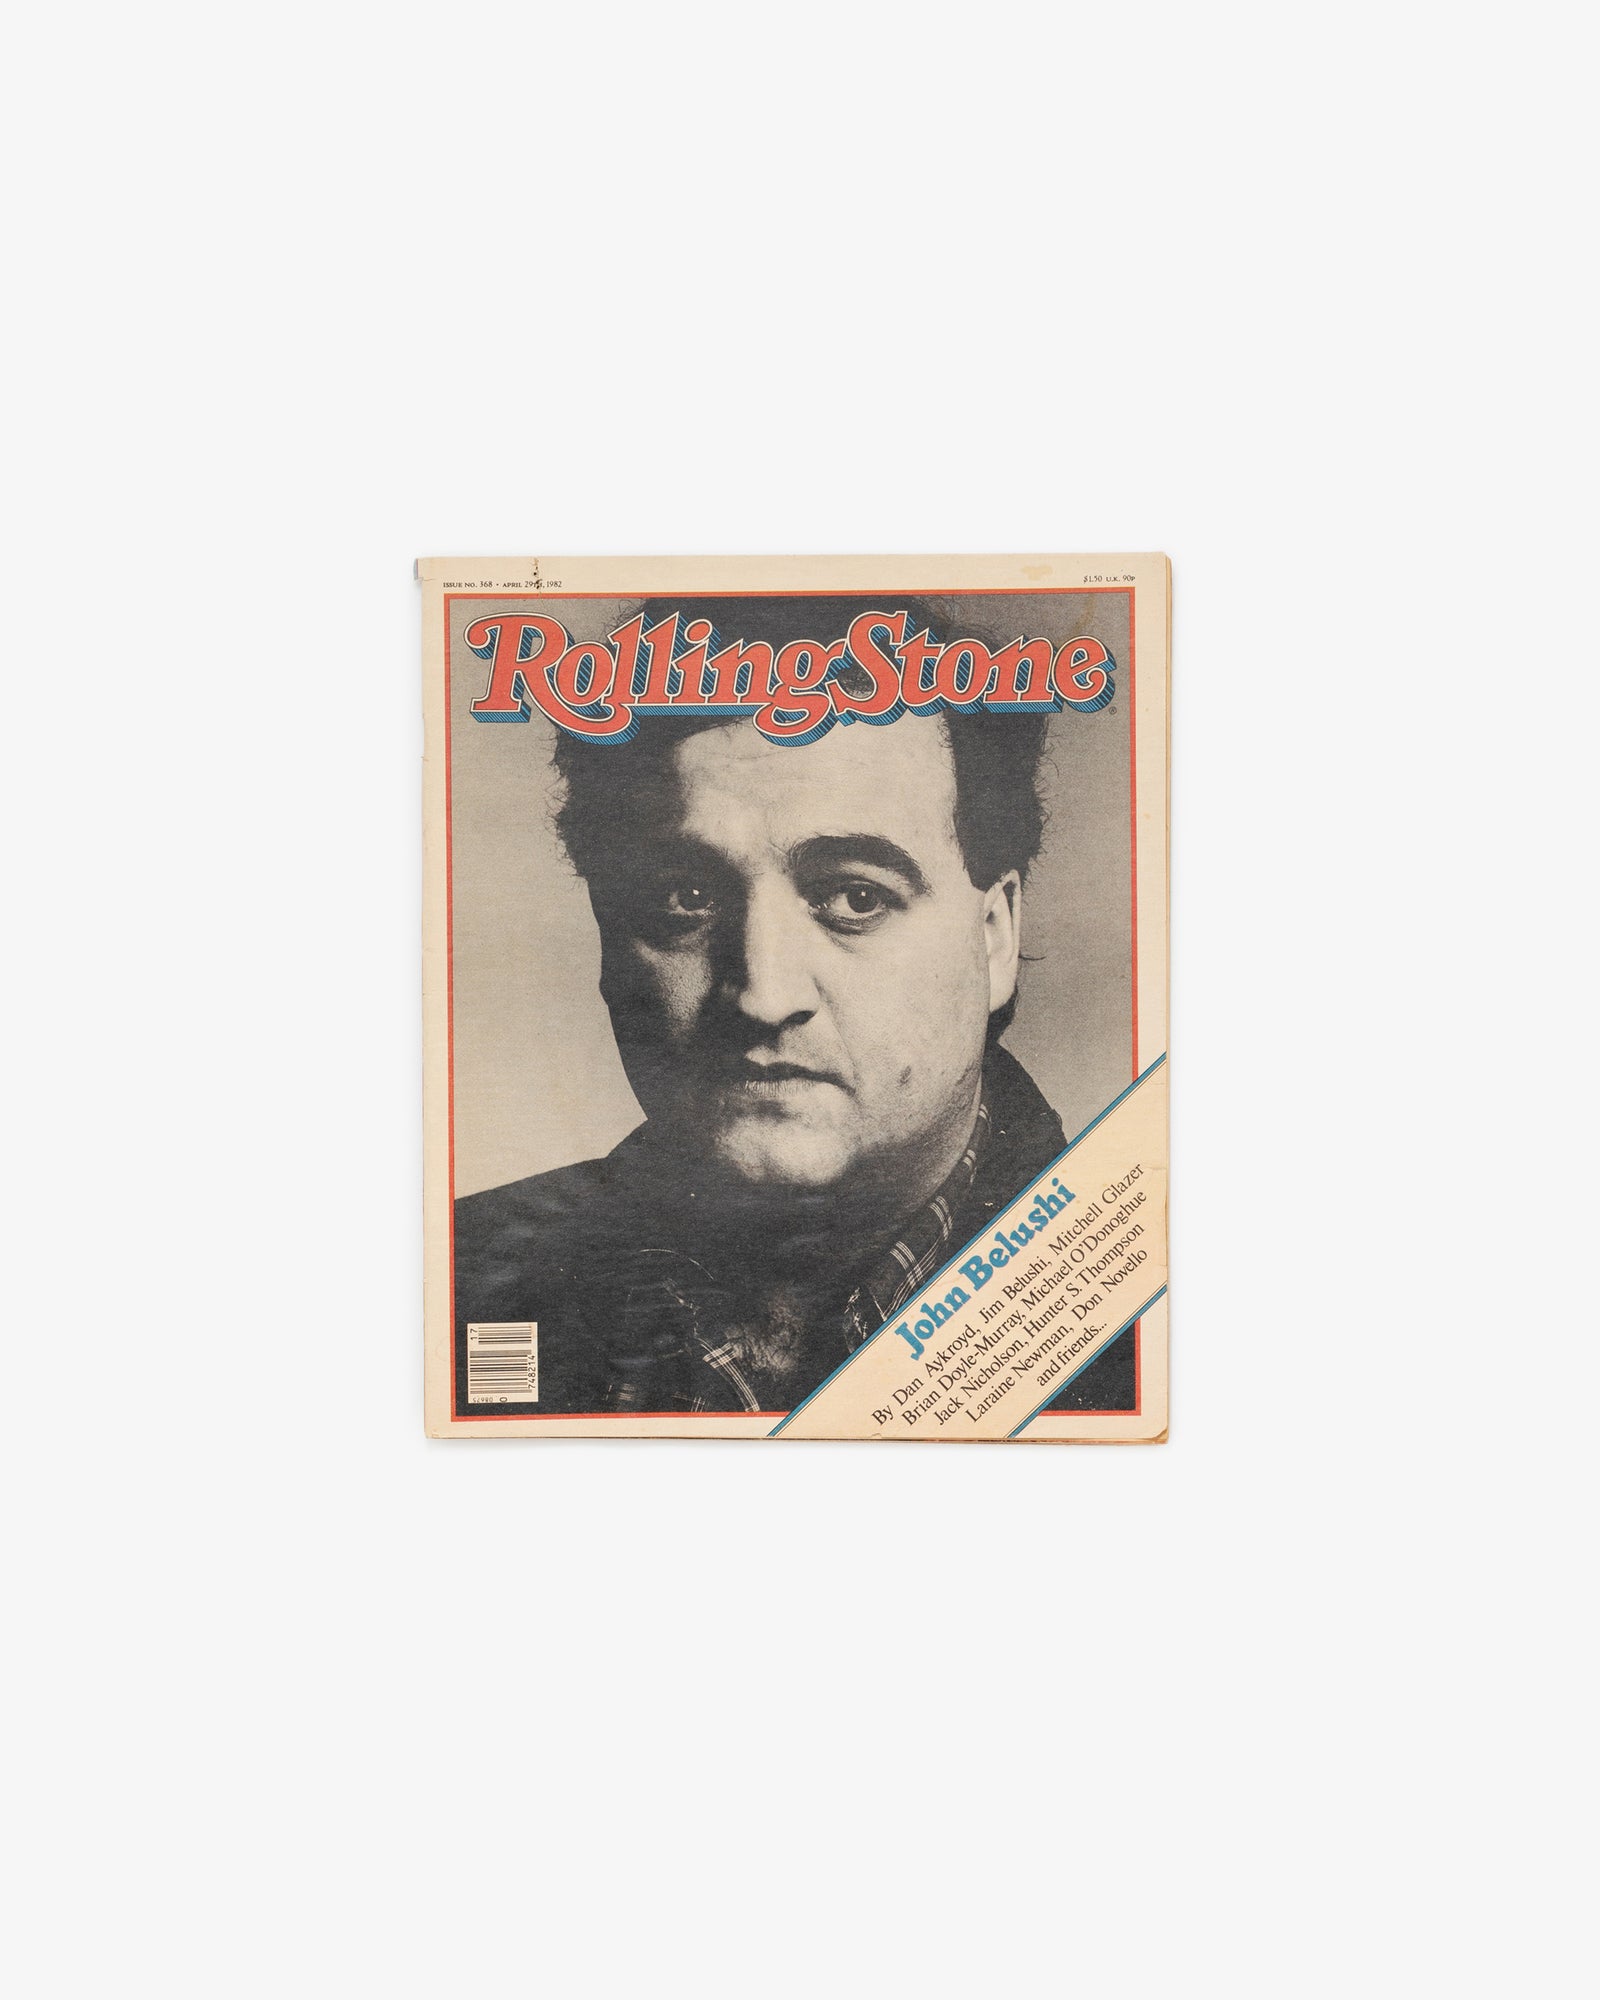 Original Rolling Stone Magazine. Issue No. 368